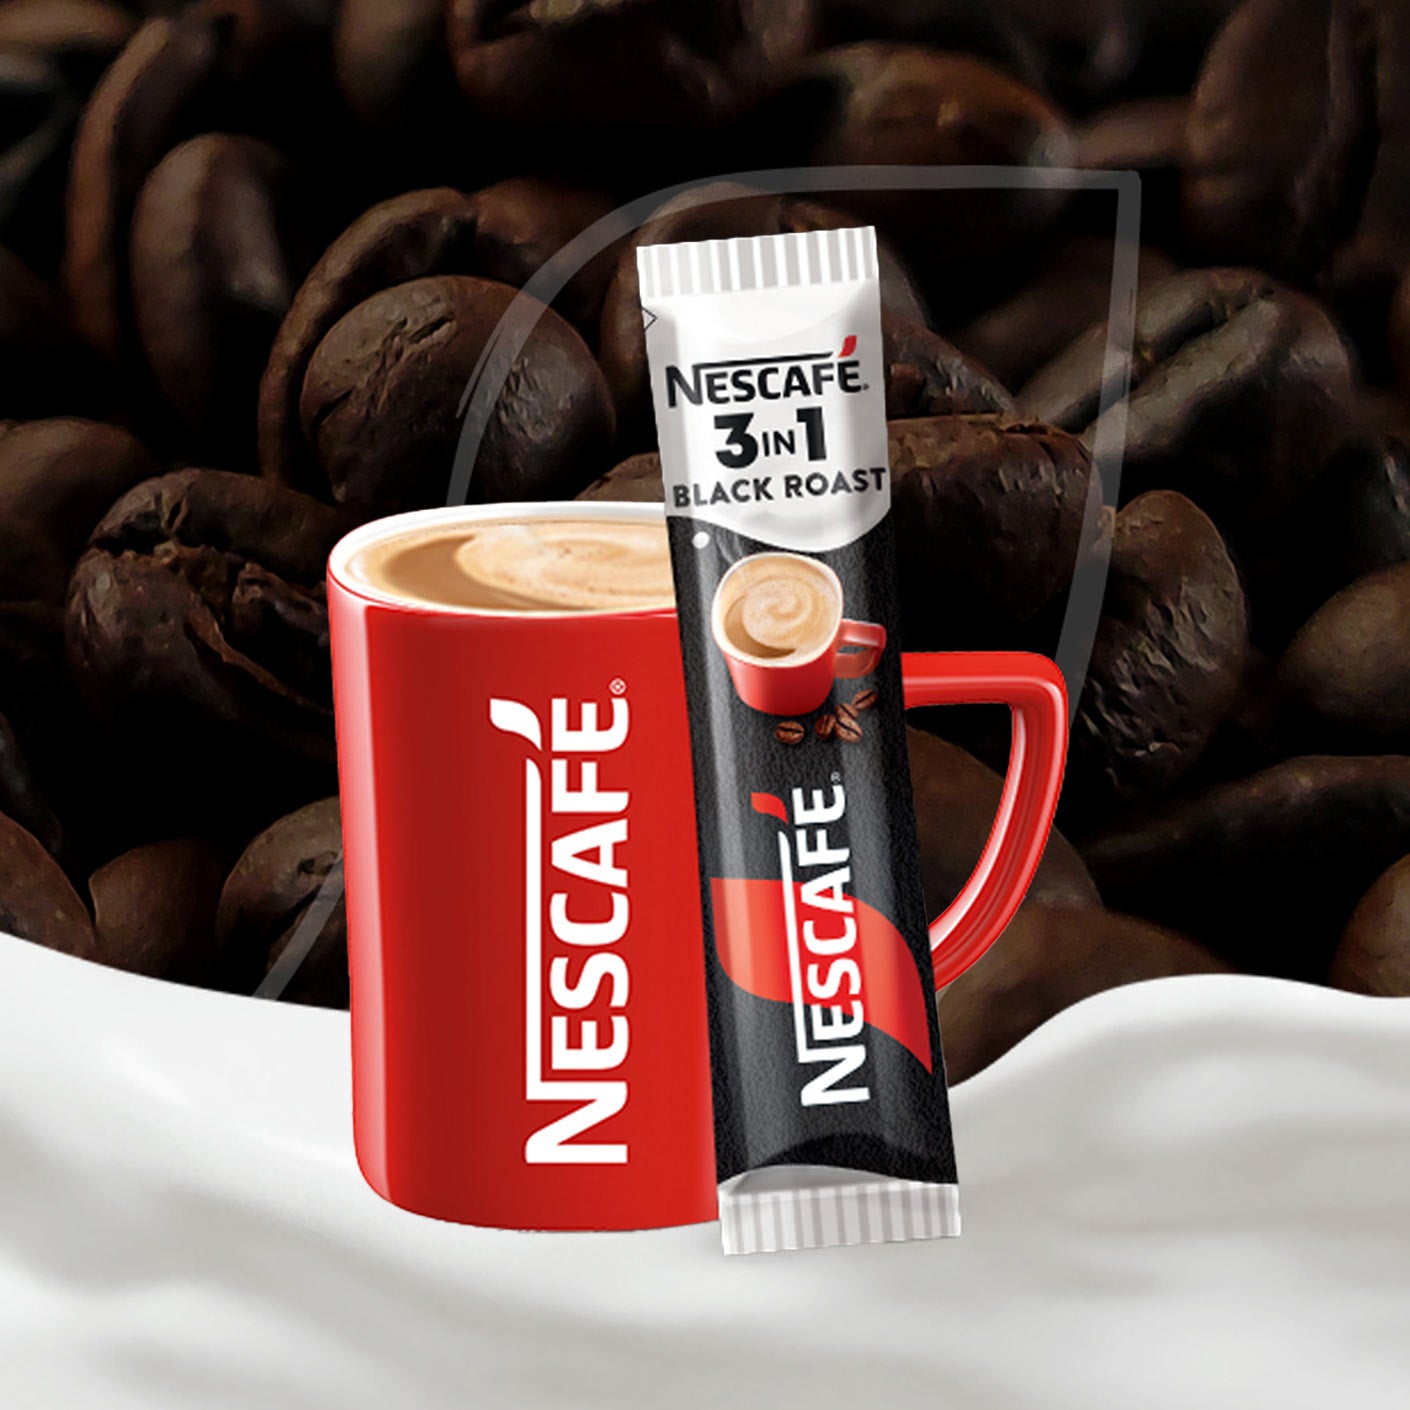 NESCAFÉ crvena šalica i NESCAFÉ 3in1 Black roast vrećica, na površini od zrna kave i mlijeka